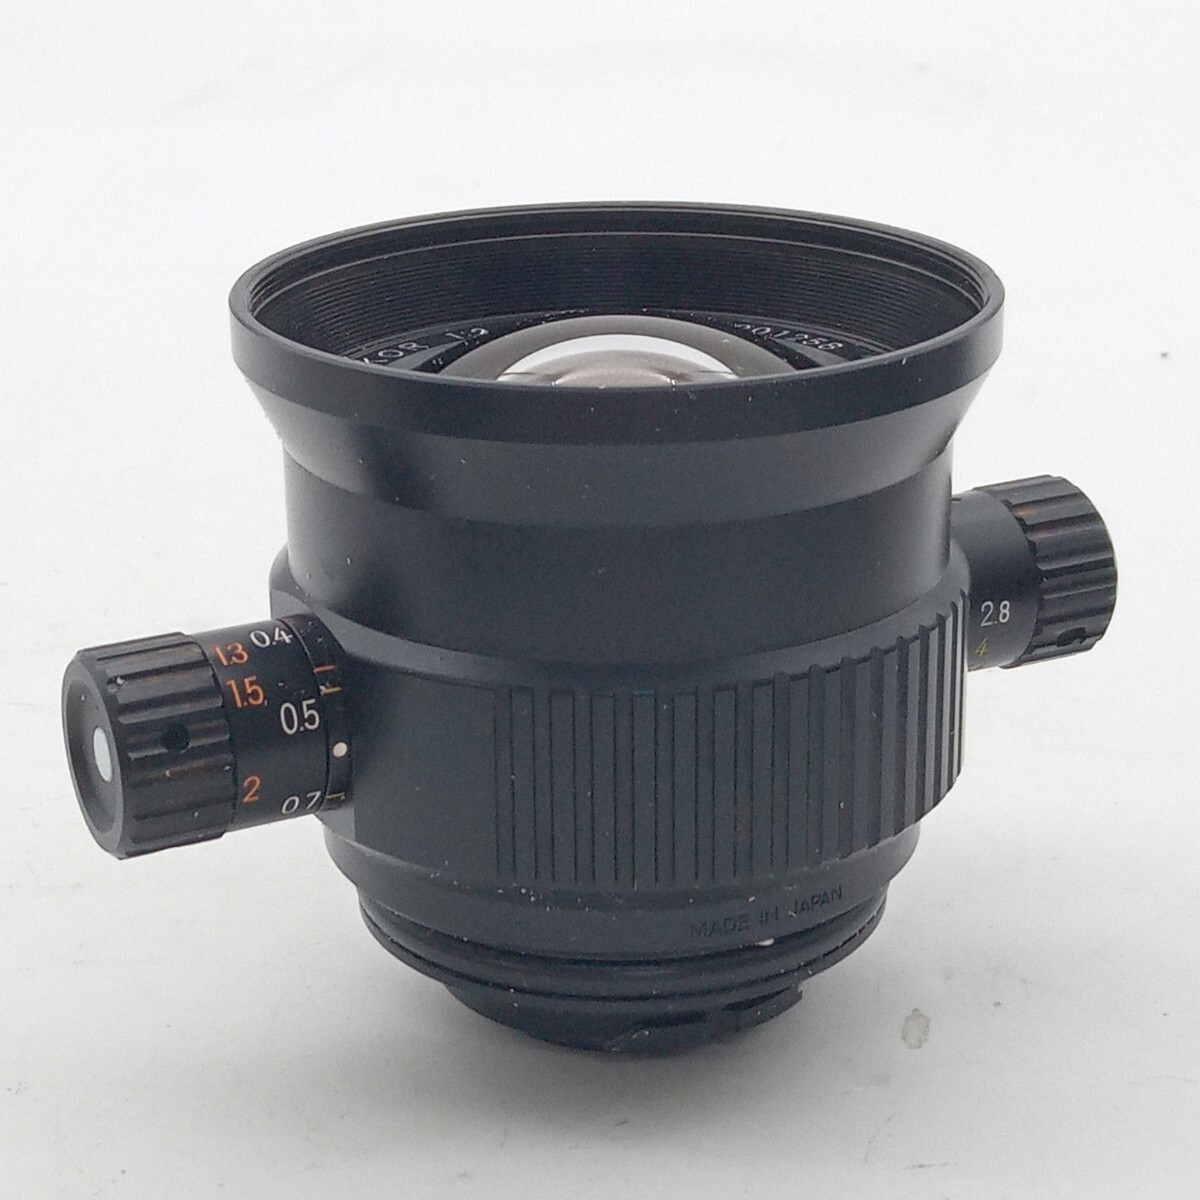 R カメラ レンズ Nikon ニコン NIKKOR カメラレンズ 動作未確認 F=20mm 1:2.8 箱付き 光学機器 の画像3